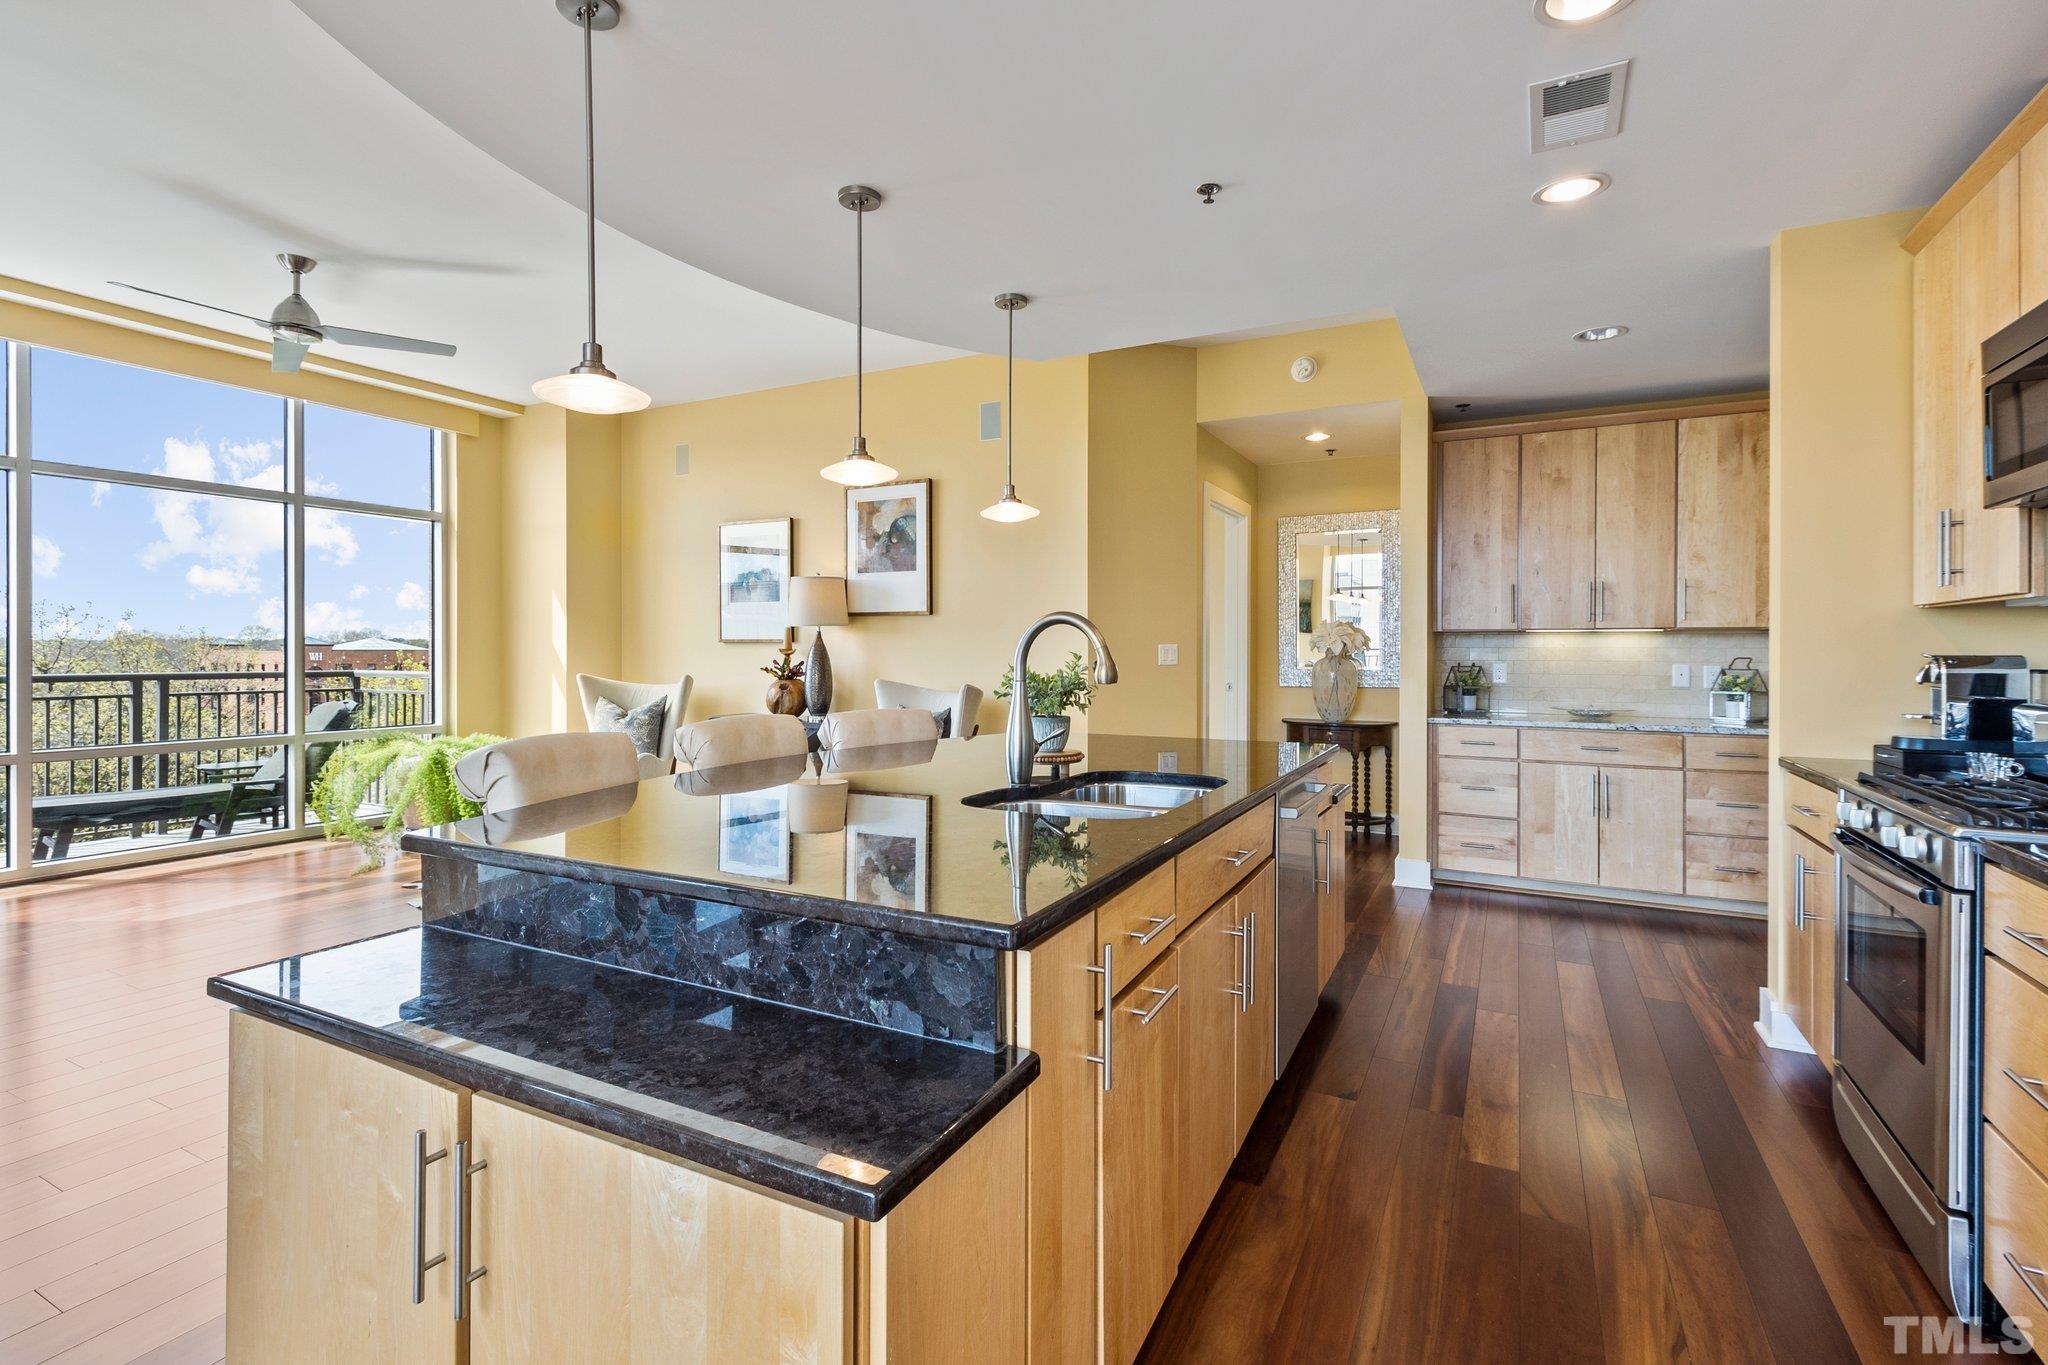 Kitchen has custom cabinetry and granite countertops